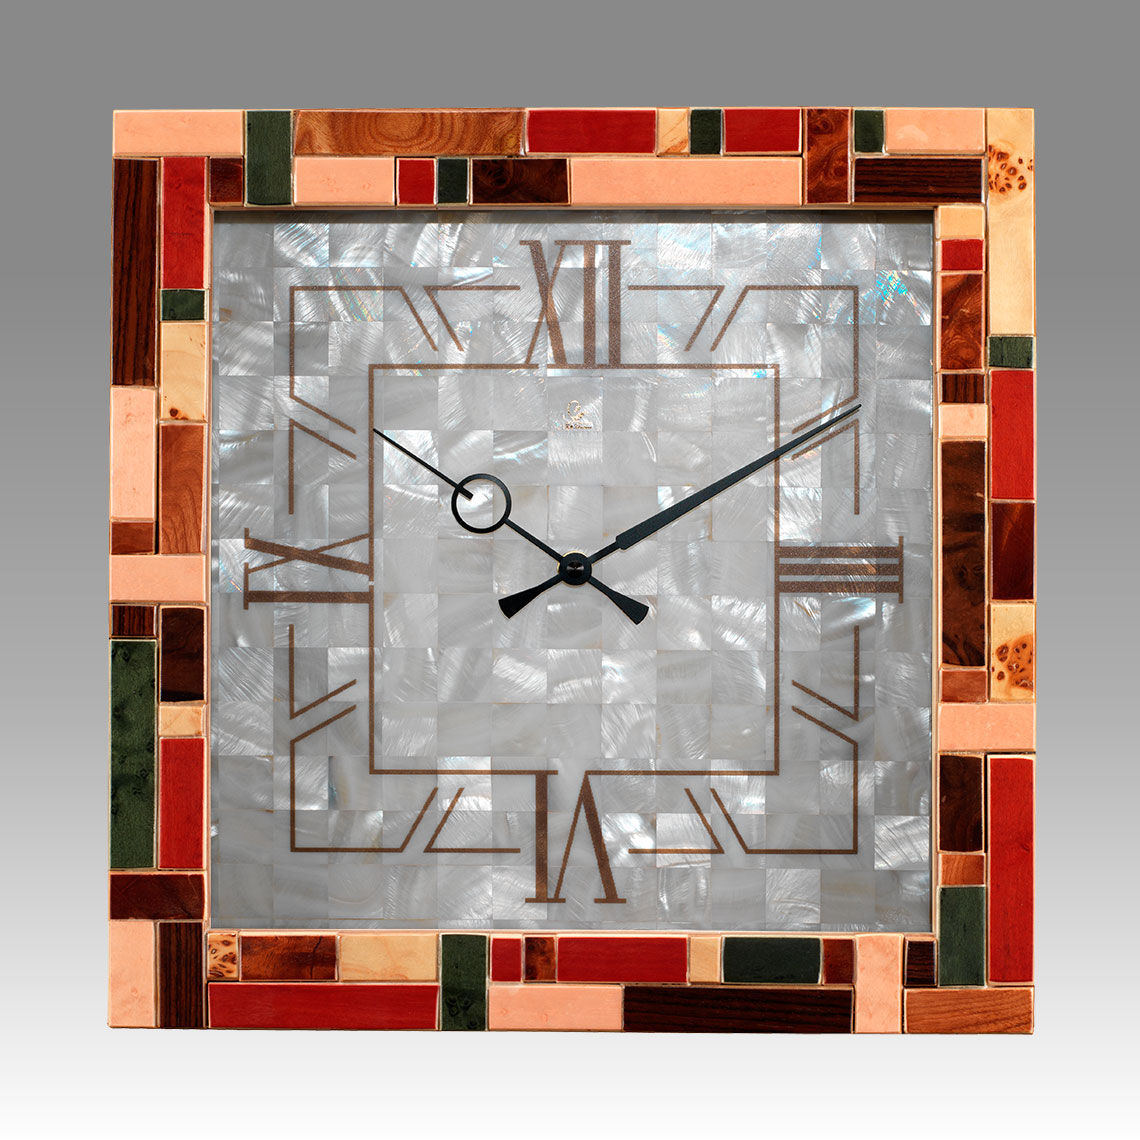 Wall Clock-Vienna Clock 205_1 polychromed mosaic inaly,real matherpearl dial, quartz battery movement